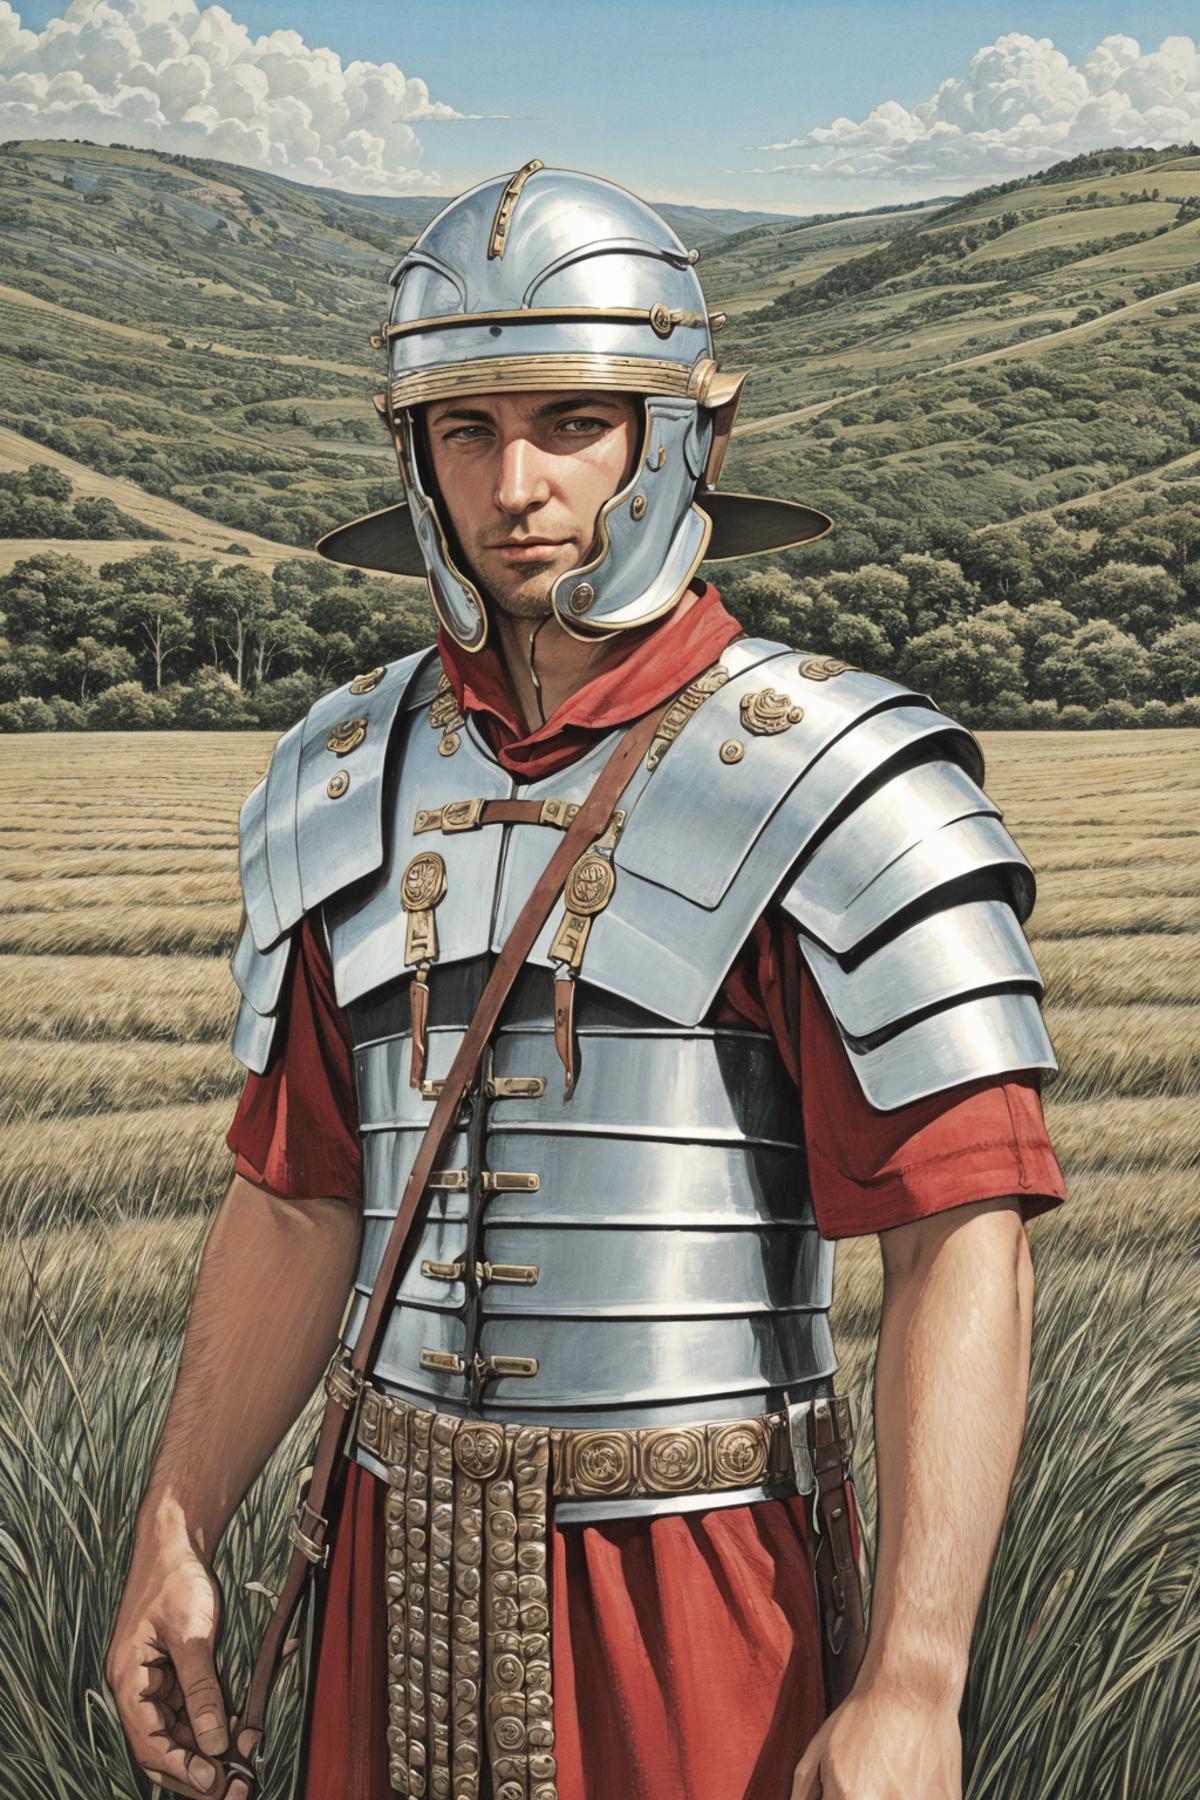 Roman Legionary - Lorica Segmentata Armor image by MelmothTheWanderer